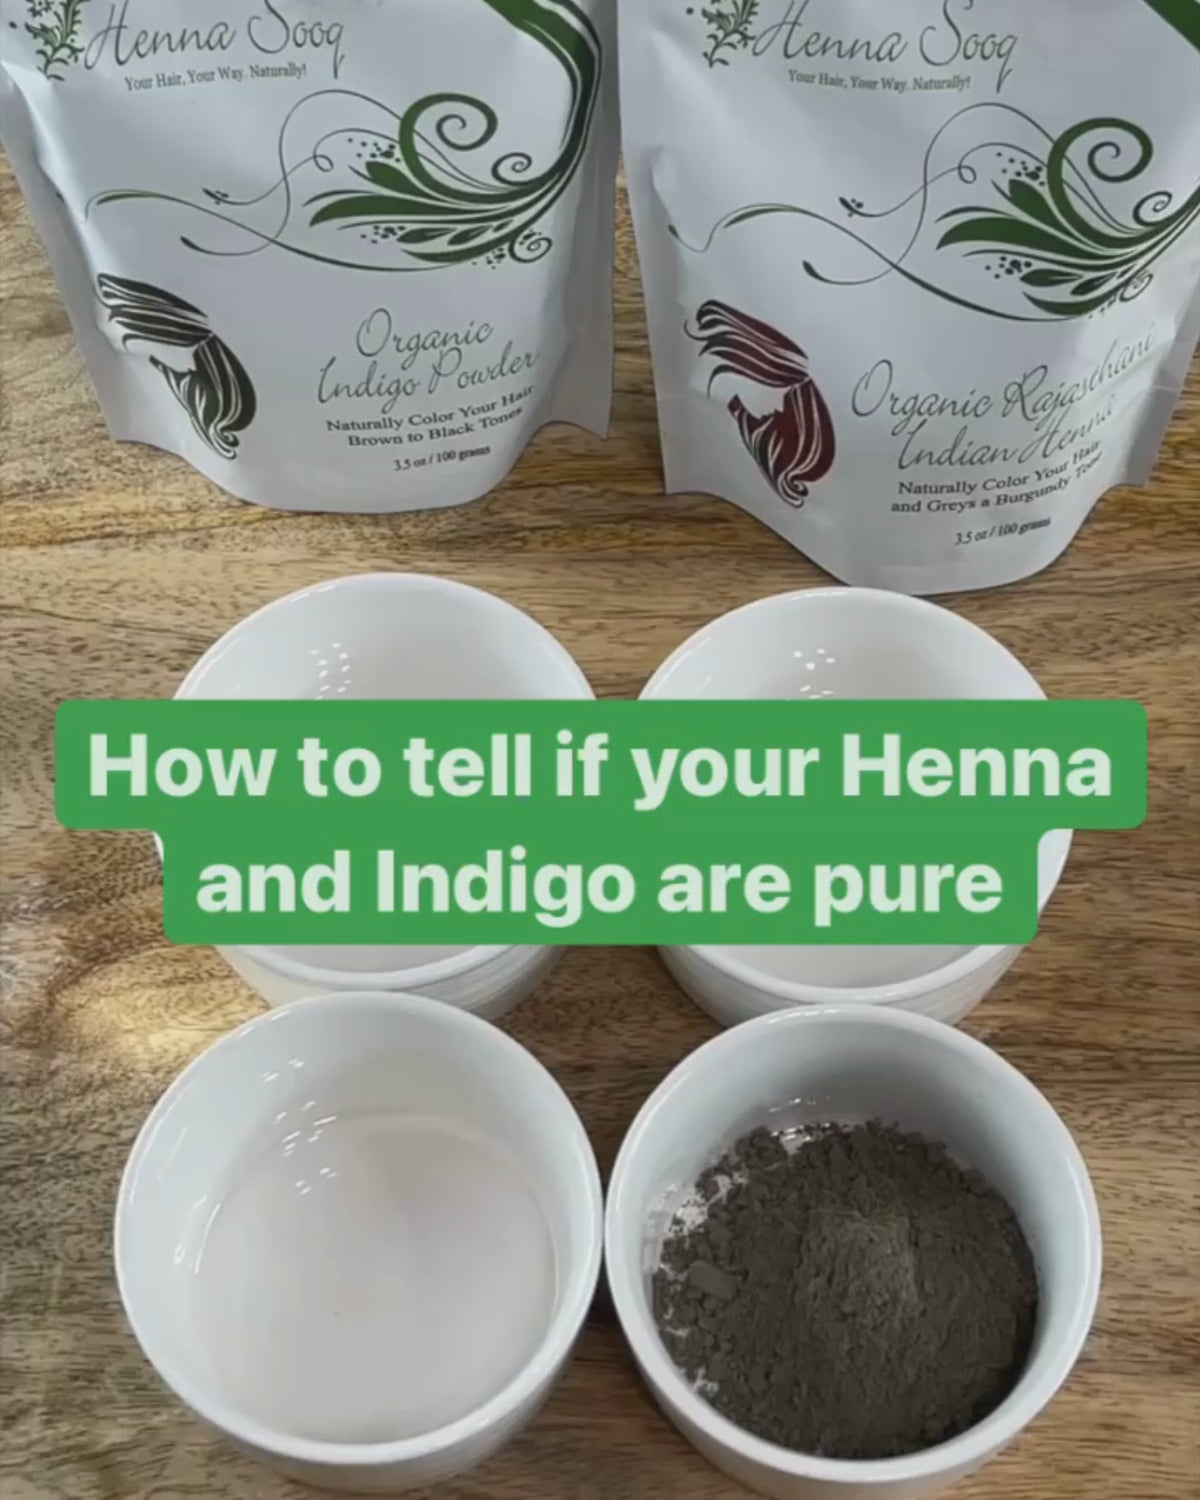 AncientVeda Indigo Powder (100% Natural), Organic